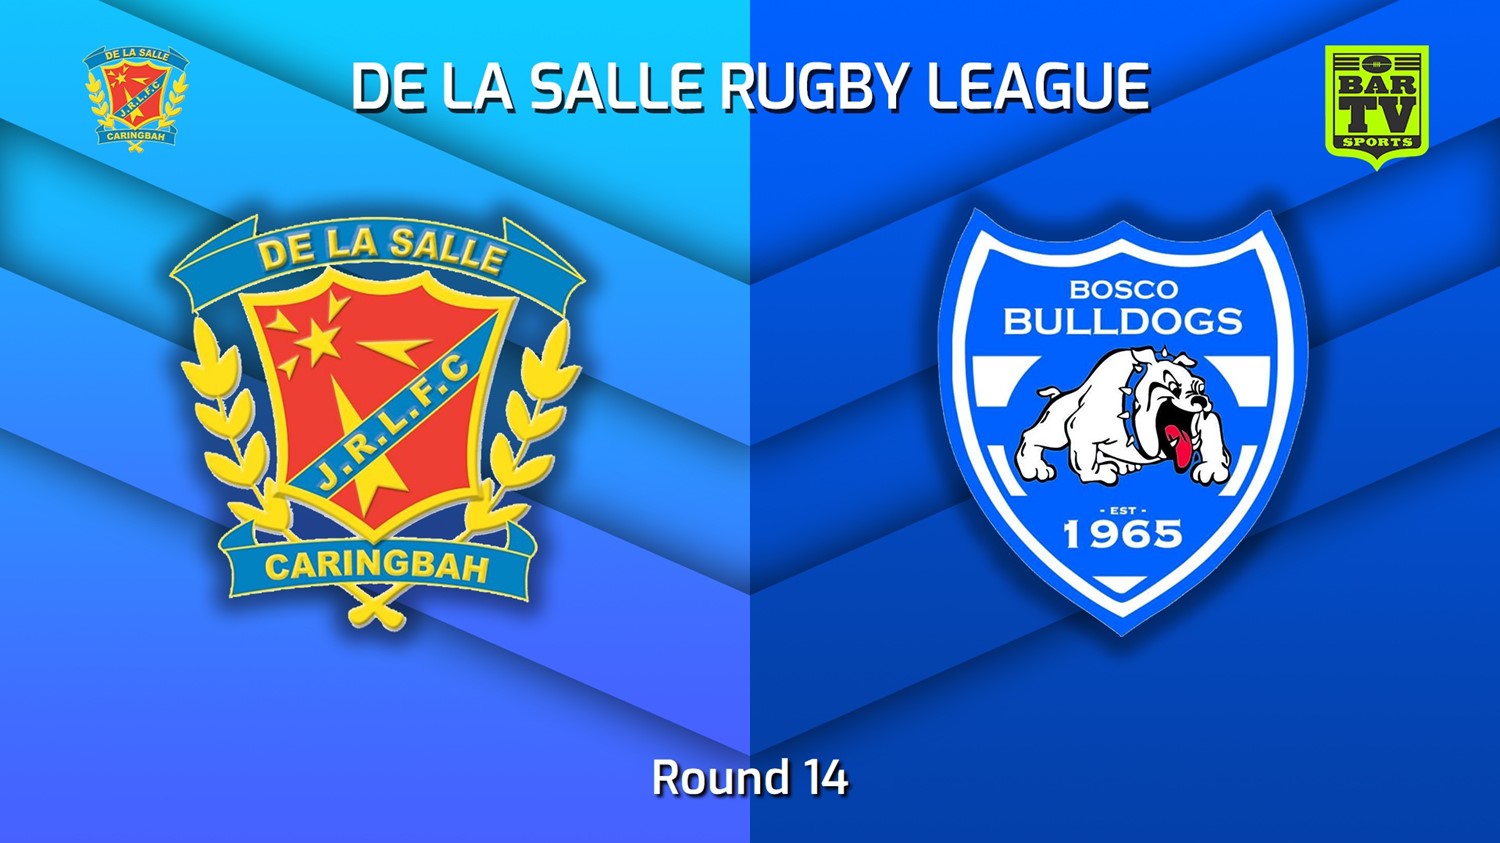 230730-De La Salle Round 14 - U15 Silver - De La Salle v St John Bosco Bulldogs Slate Image